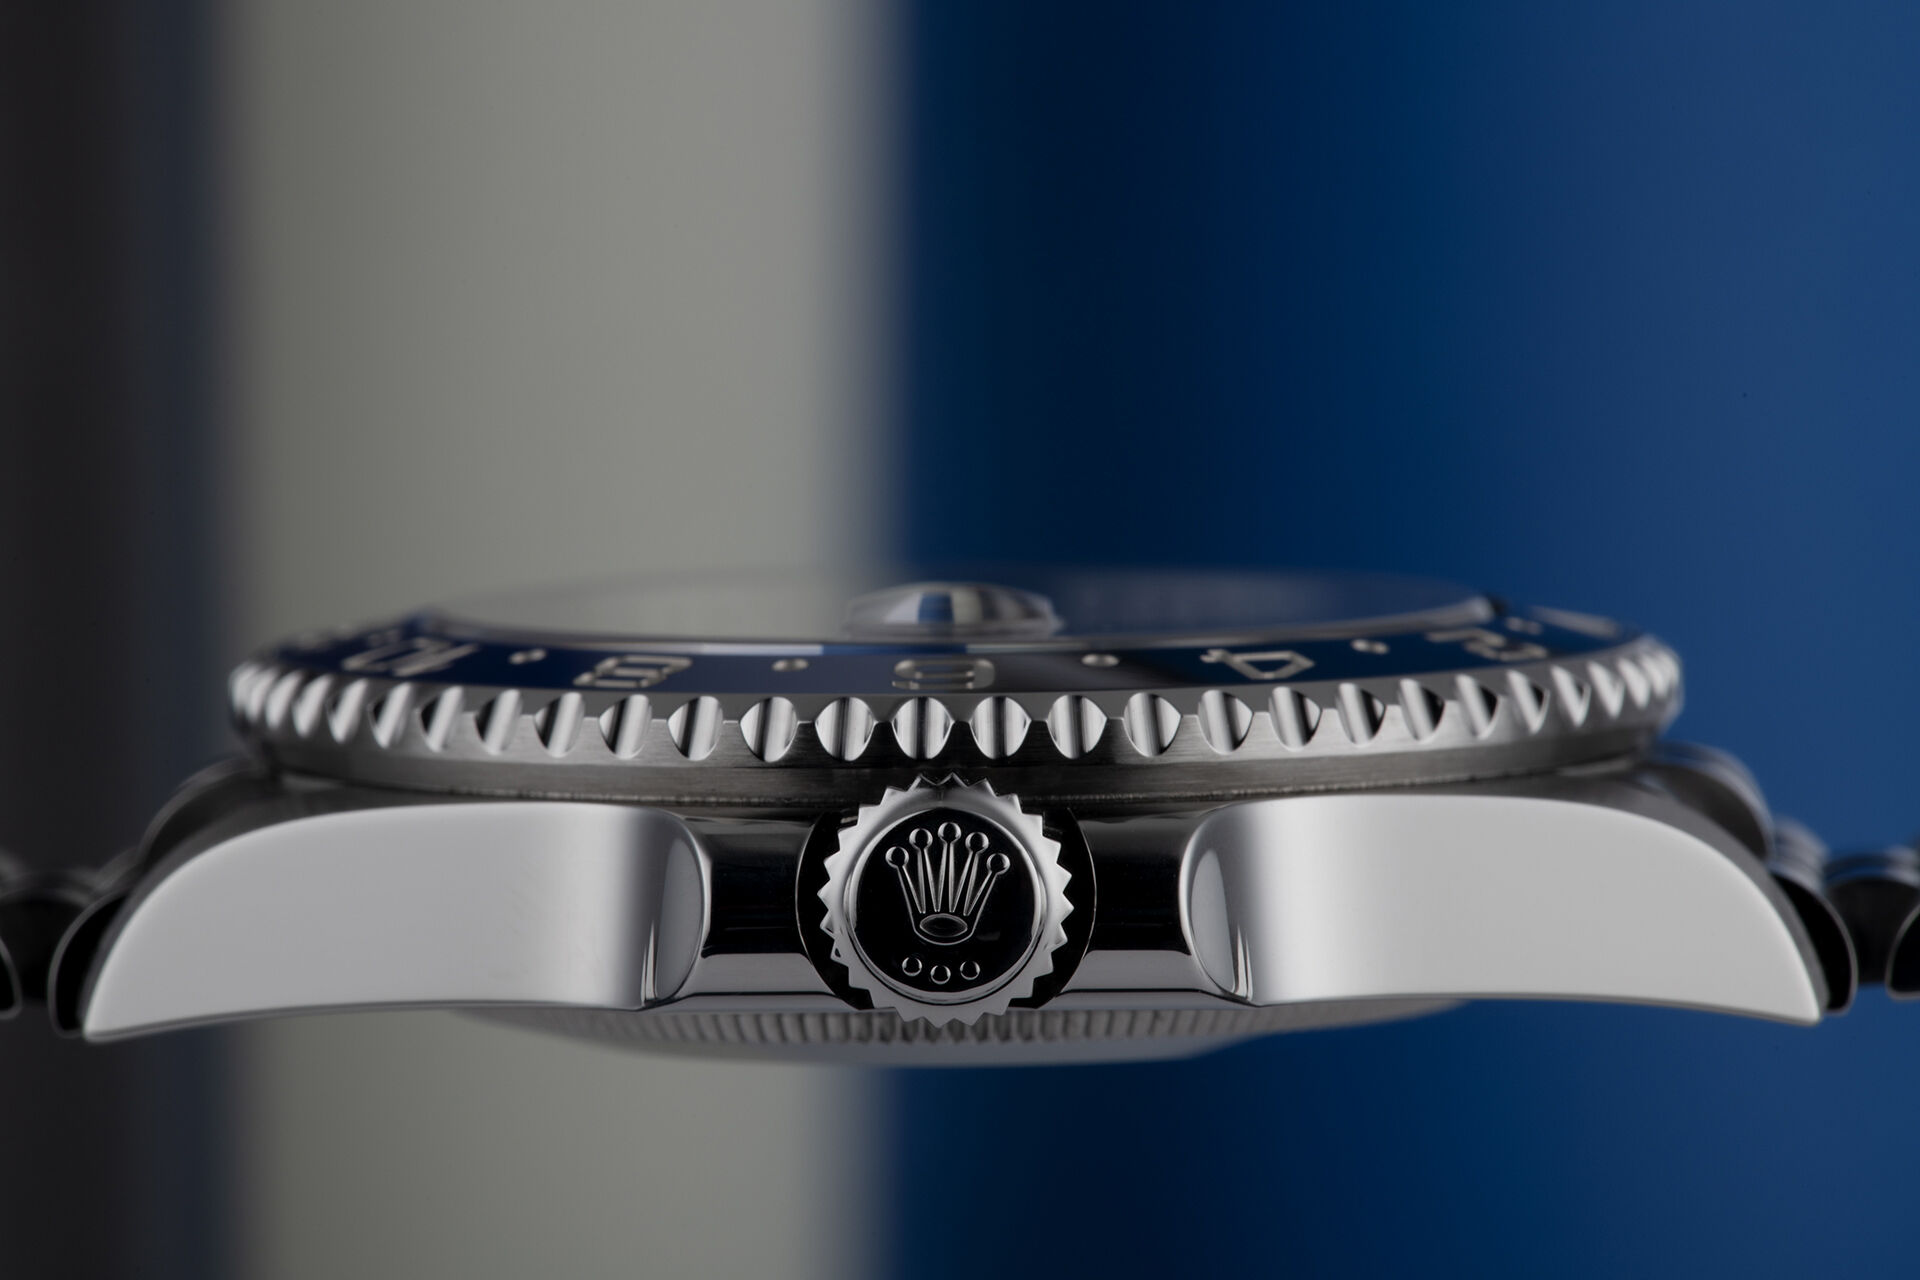 ref 126710BLNR | Brand New | Rolex GMT-Master II